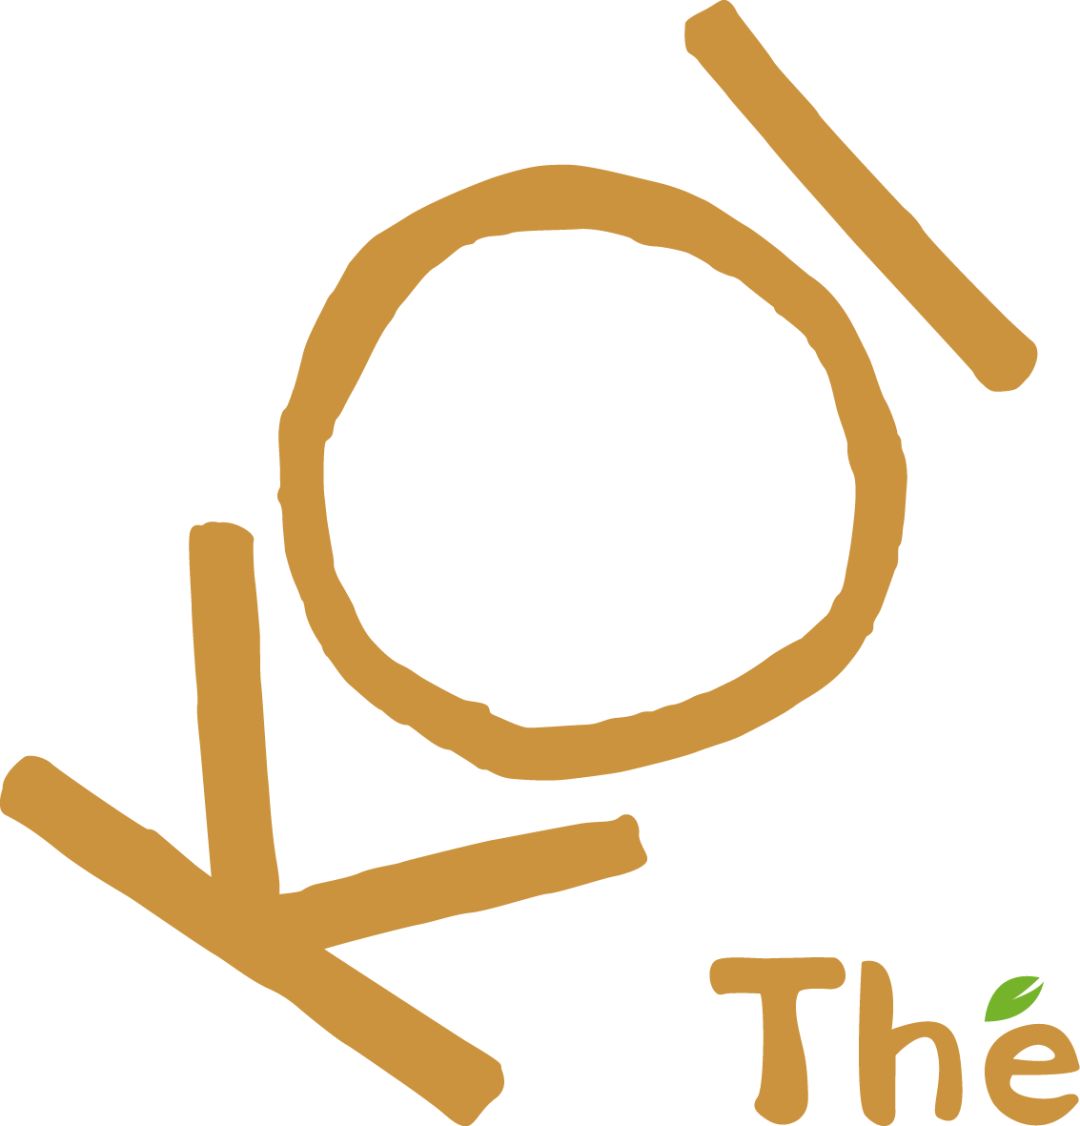 koi奶茶logo图片